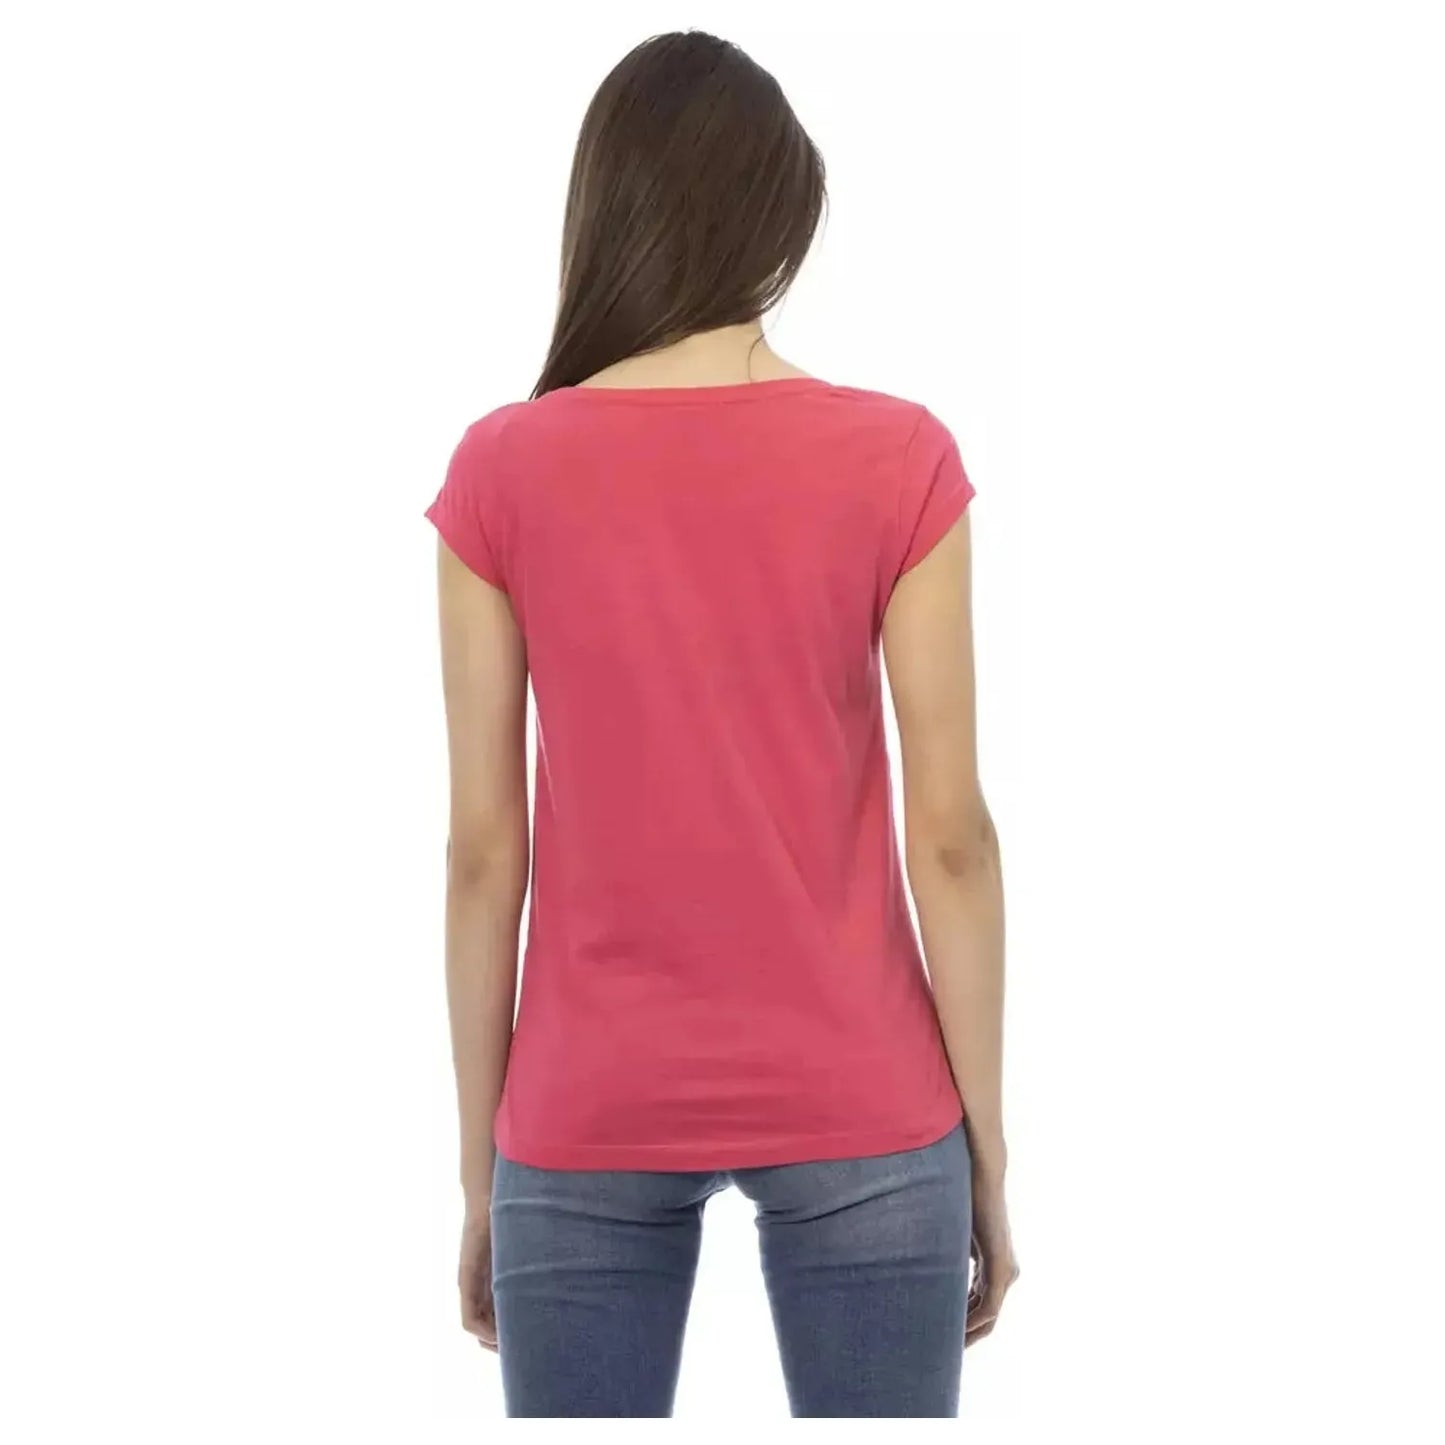 Trussardi Action Pink Short Sleeve Fashion Tee pink-cotton-tops-t-shirt-32